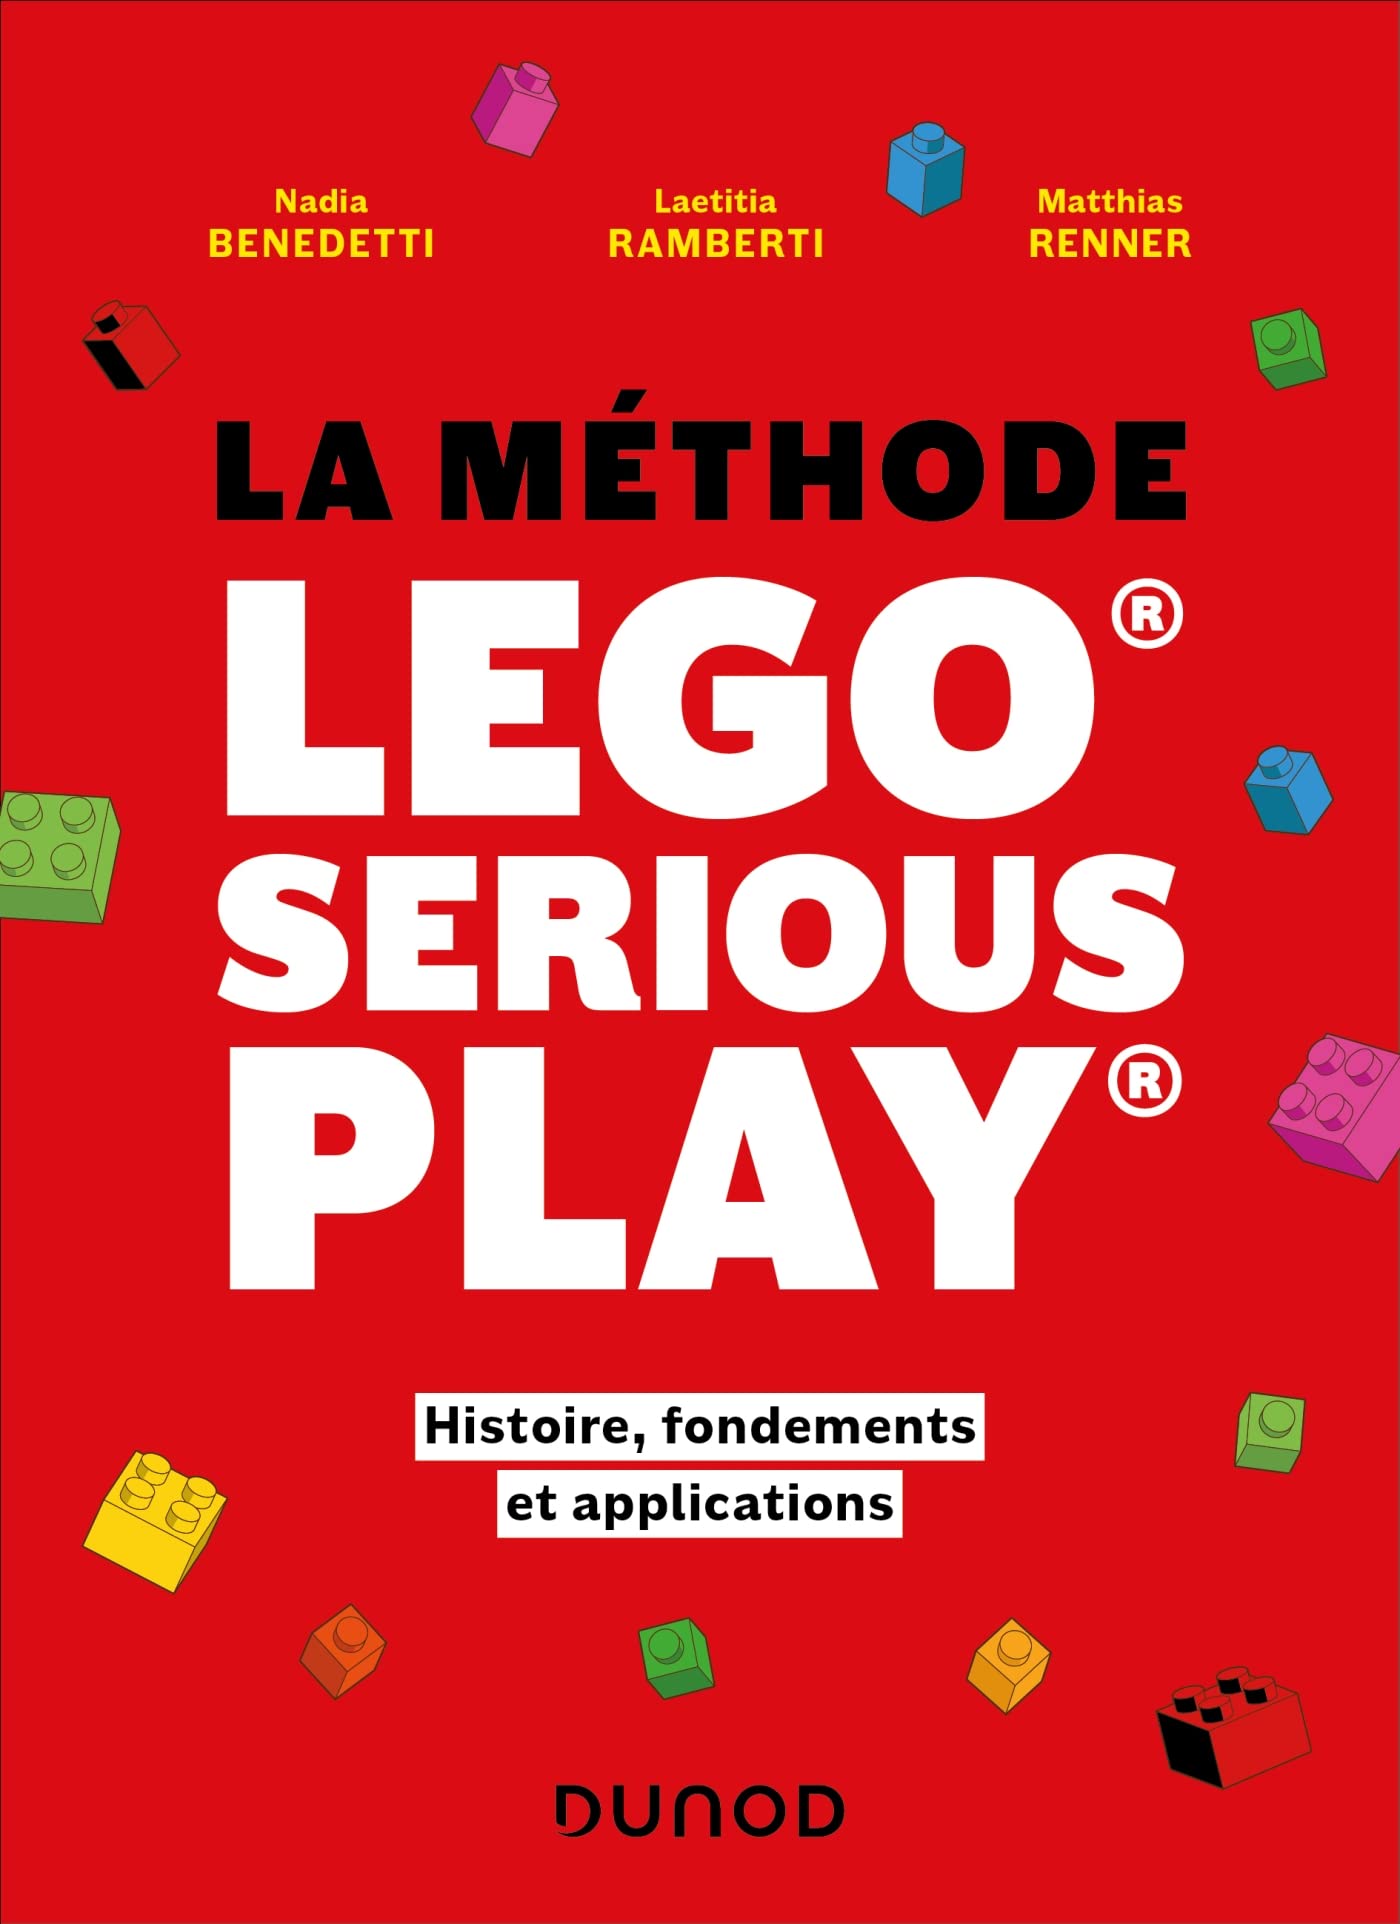 Méthode LEGO SERIOUS PLAY // livre en français // BAM4LSP // Dunod // contributions